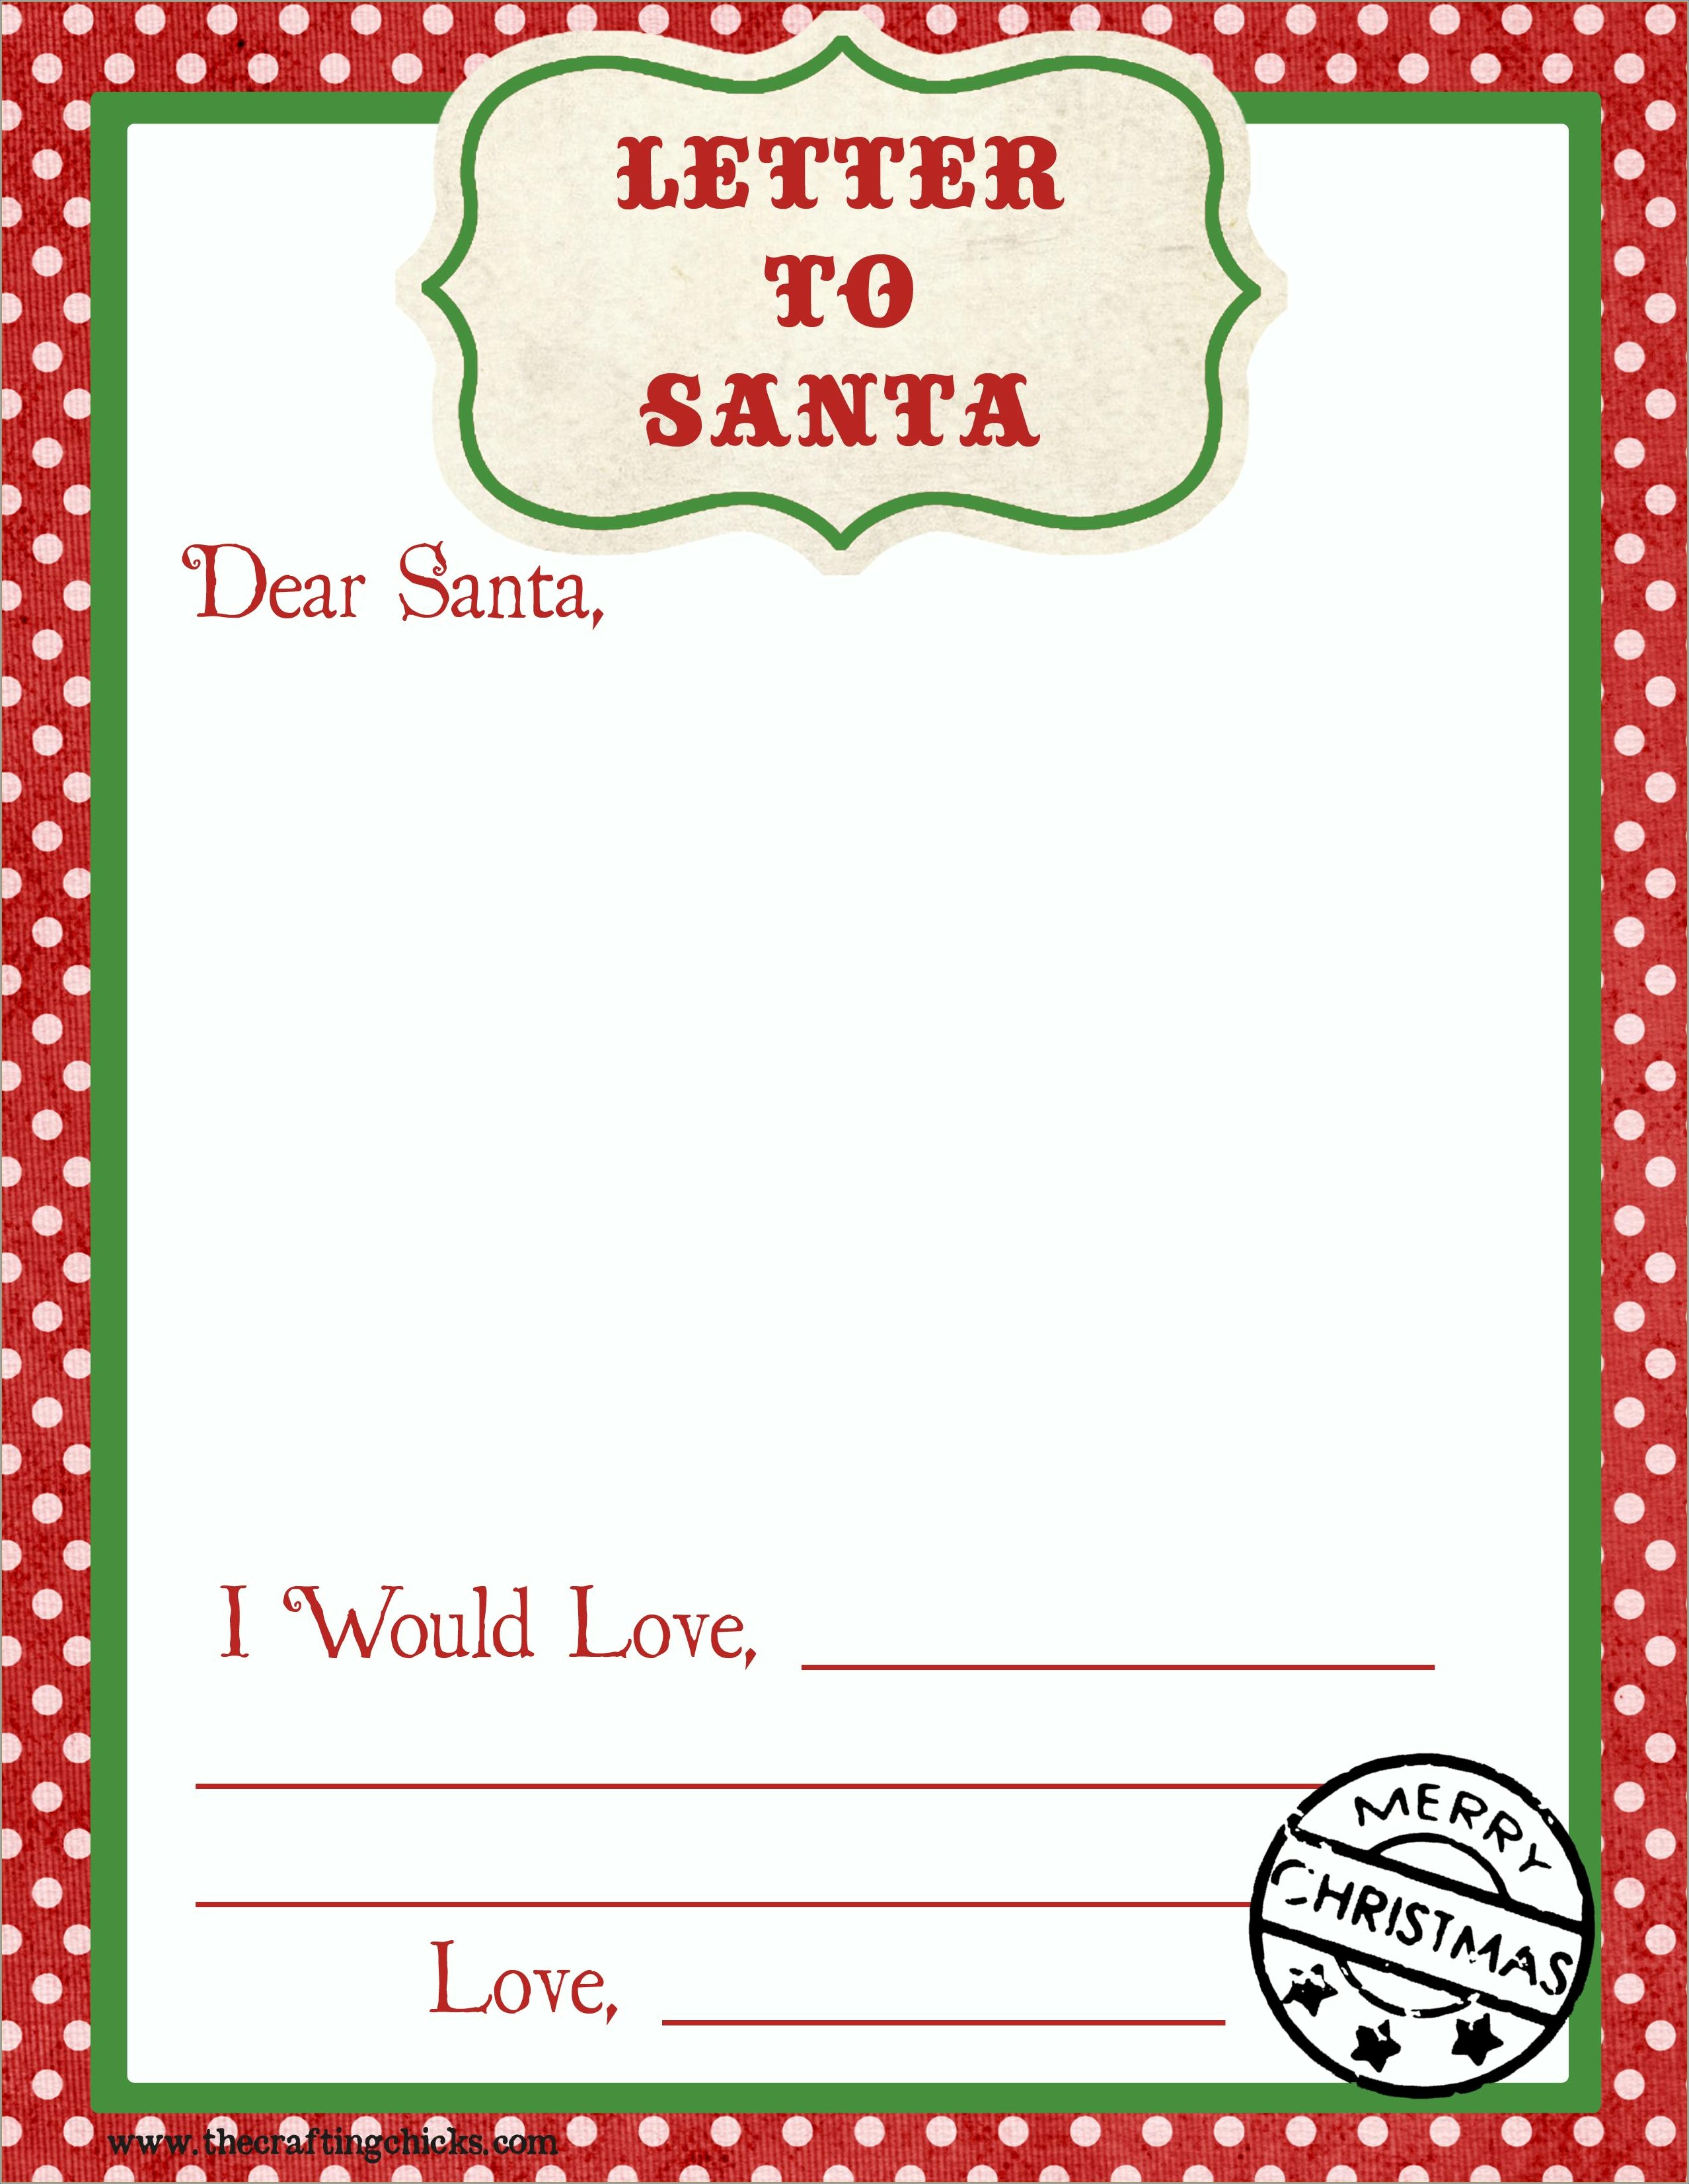 Letters To Santa 2012 Templates Free Printable